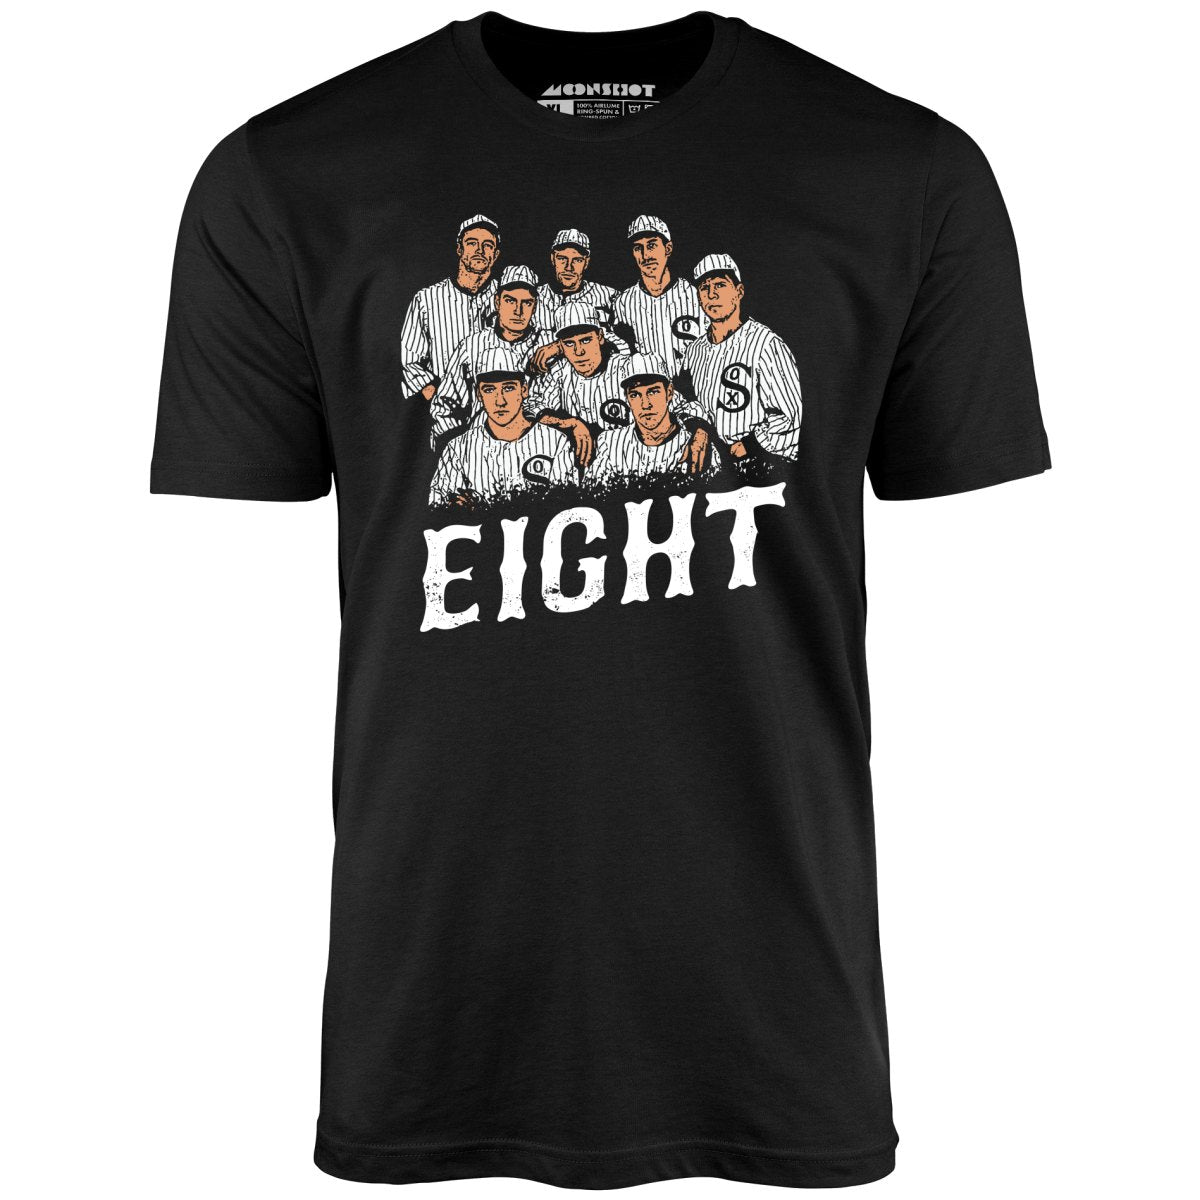 Eight Men Out - Unisex T-Shirt